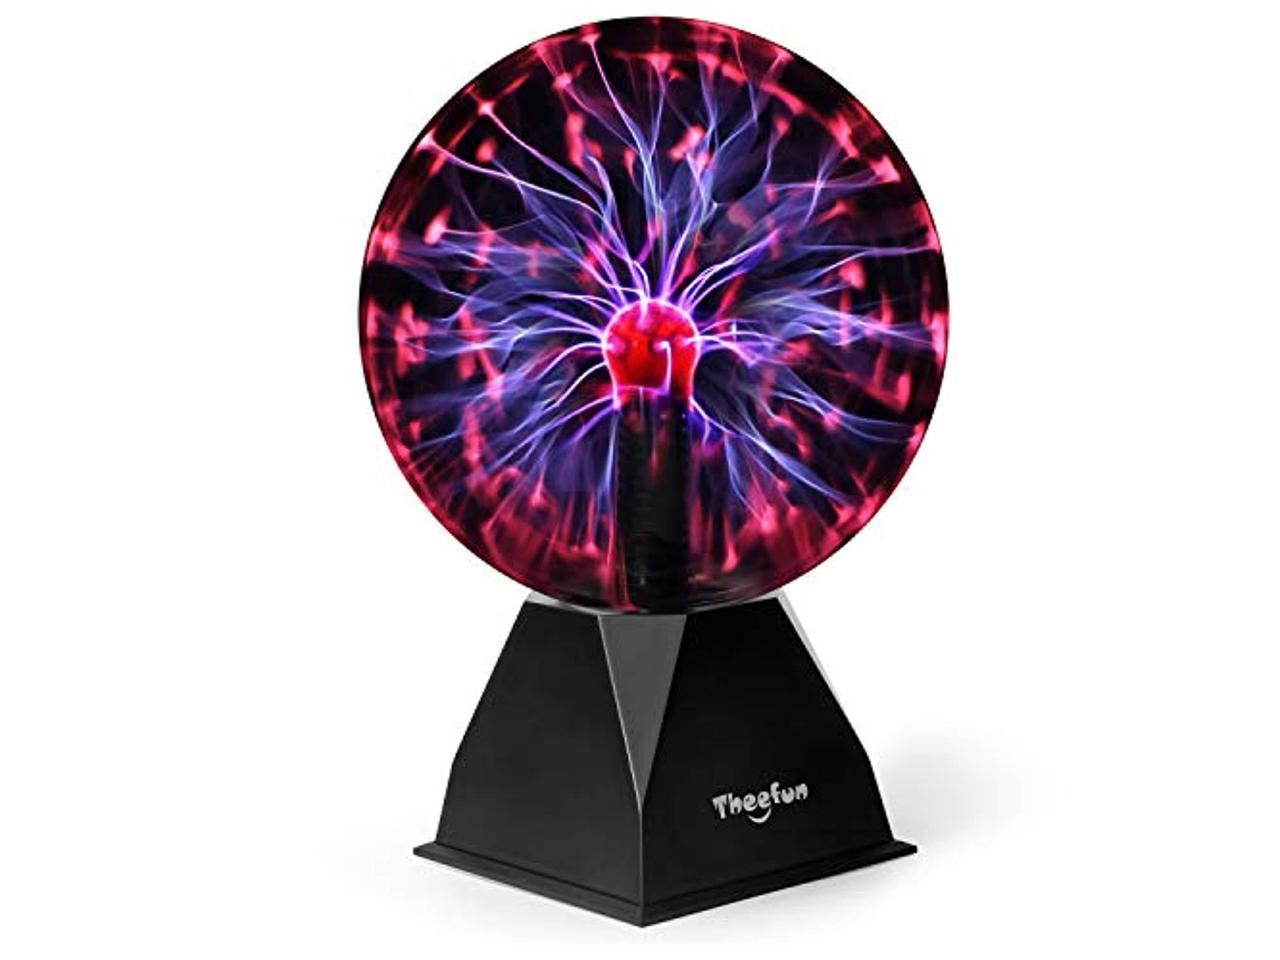 9" Plasma Ball Sphere Globe Amazing Holiday Lightning Lamp Light Sound Response 